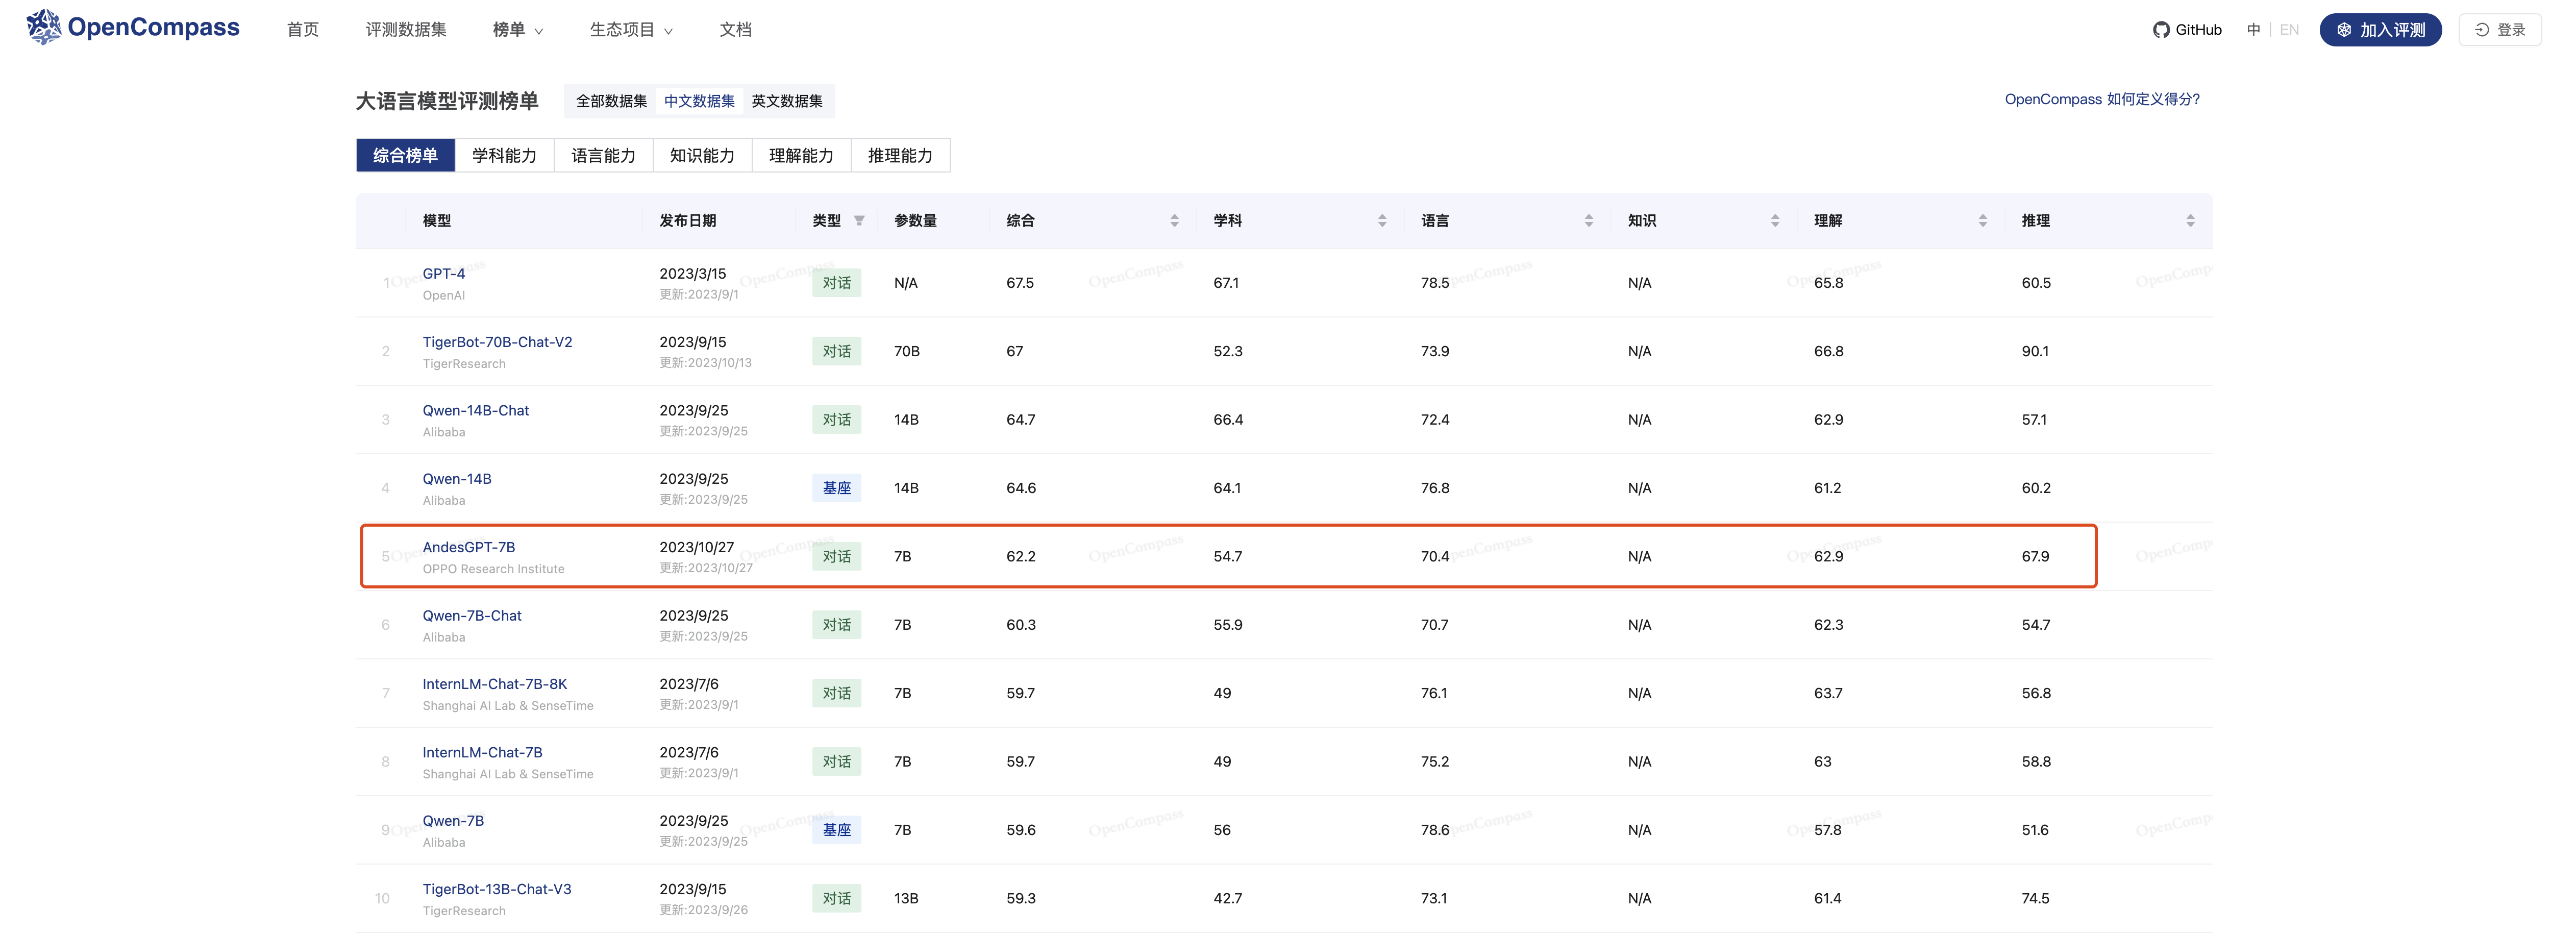 (OpenCompass大言语模子评测榜单-中语数据集 2023/10/30)